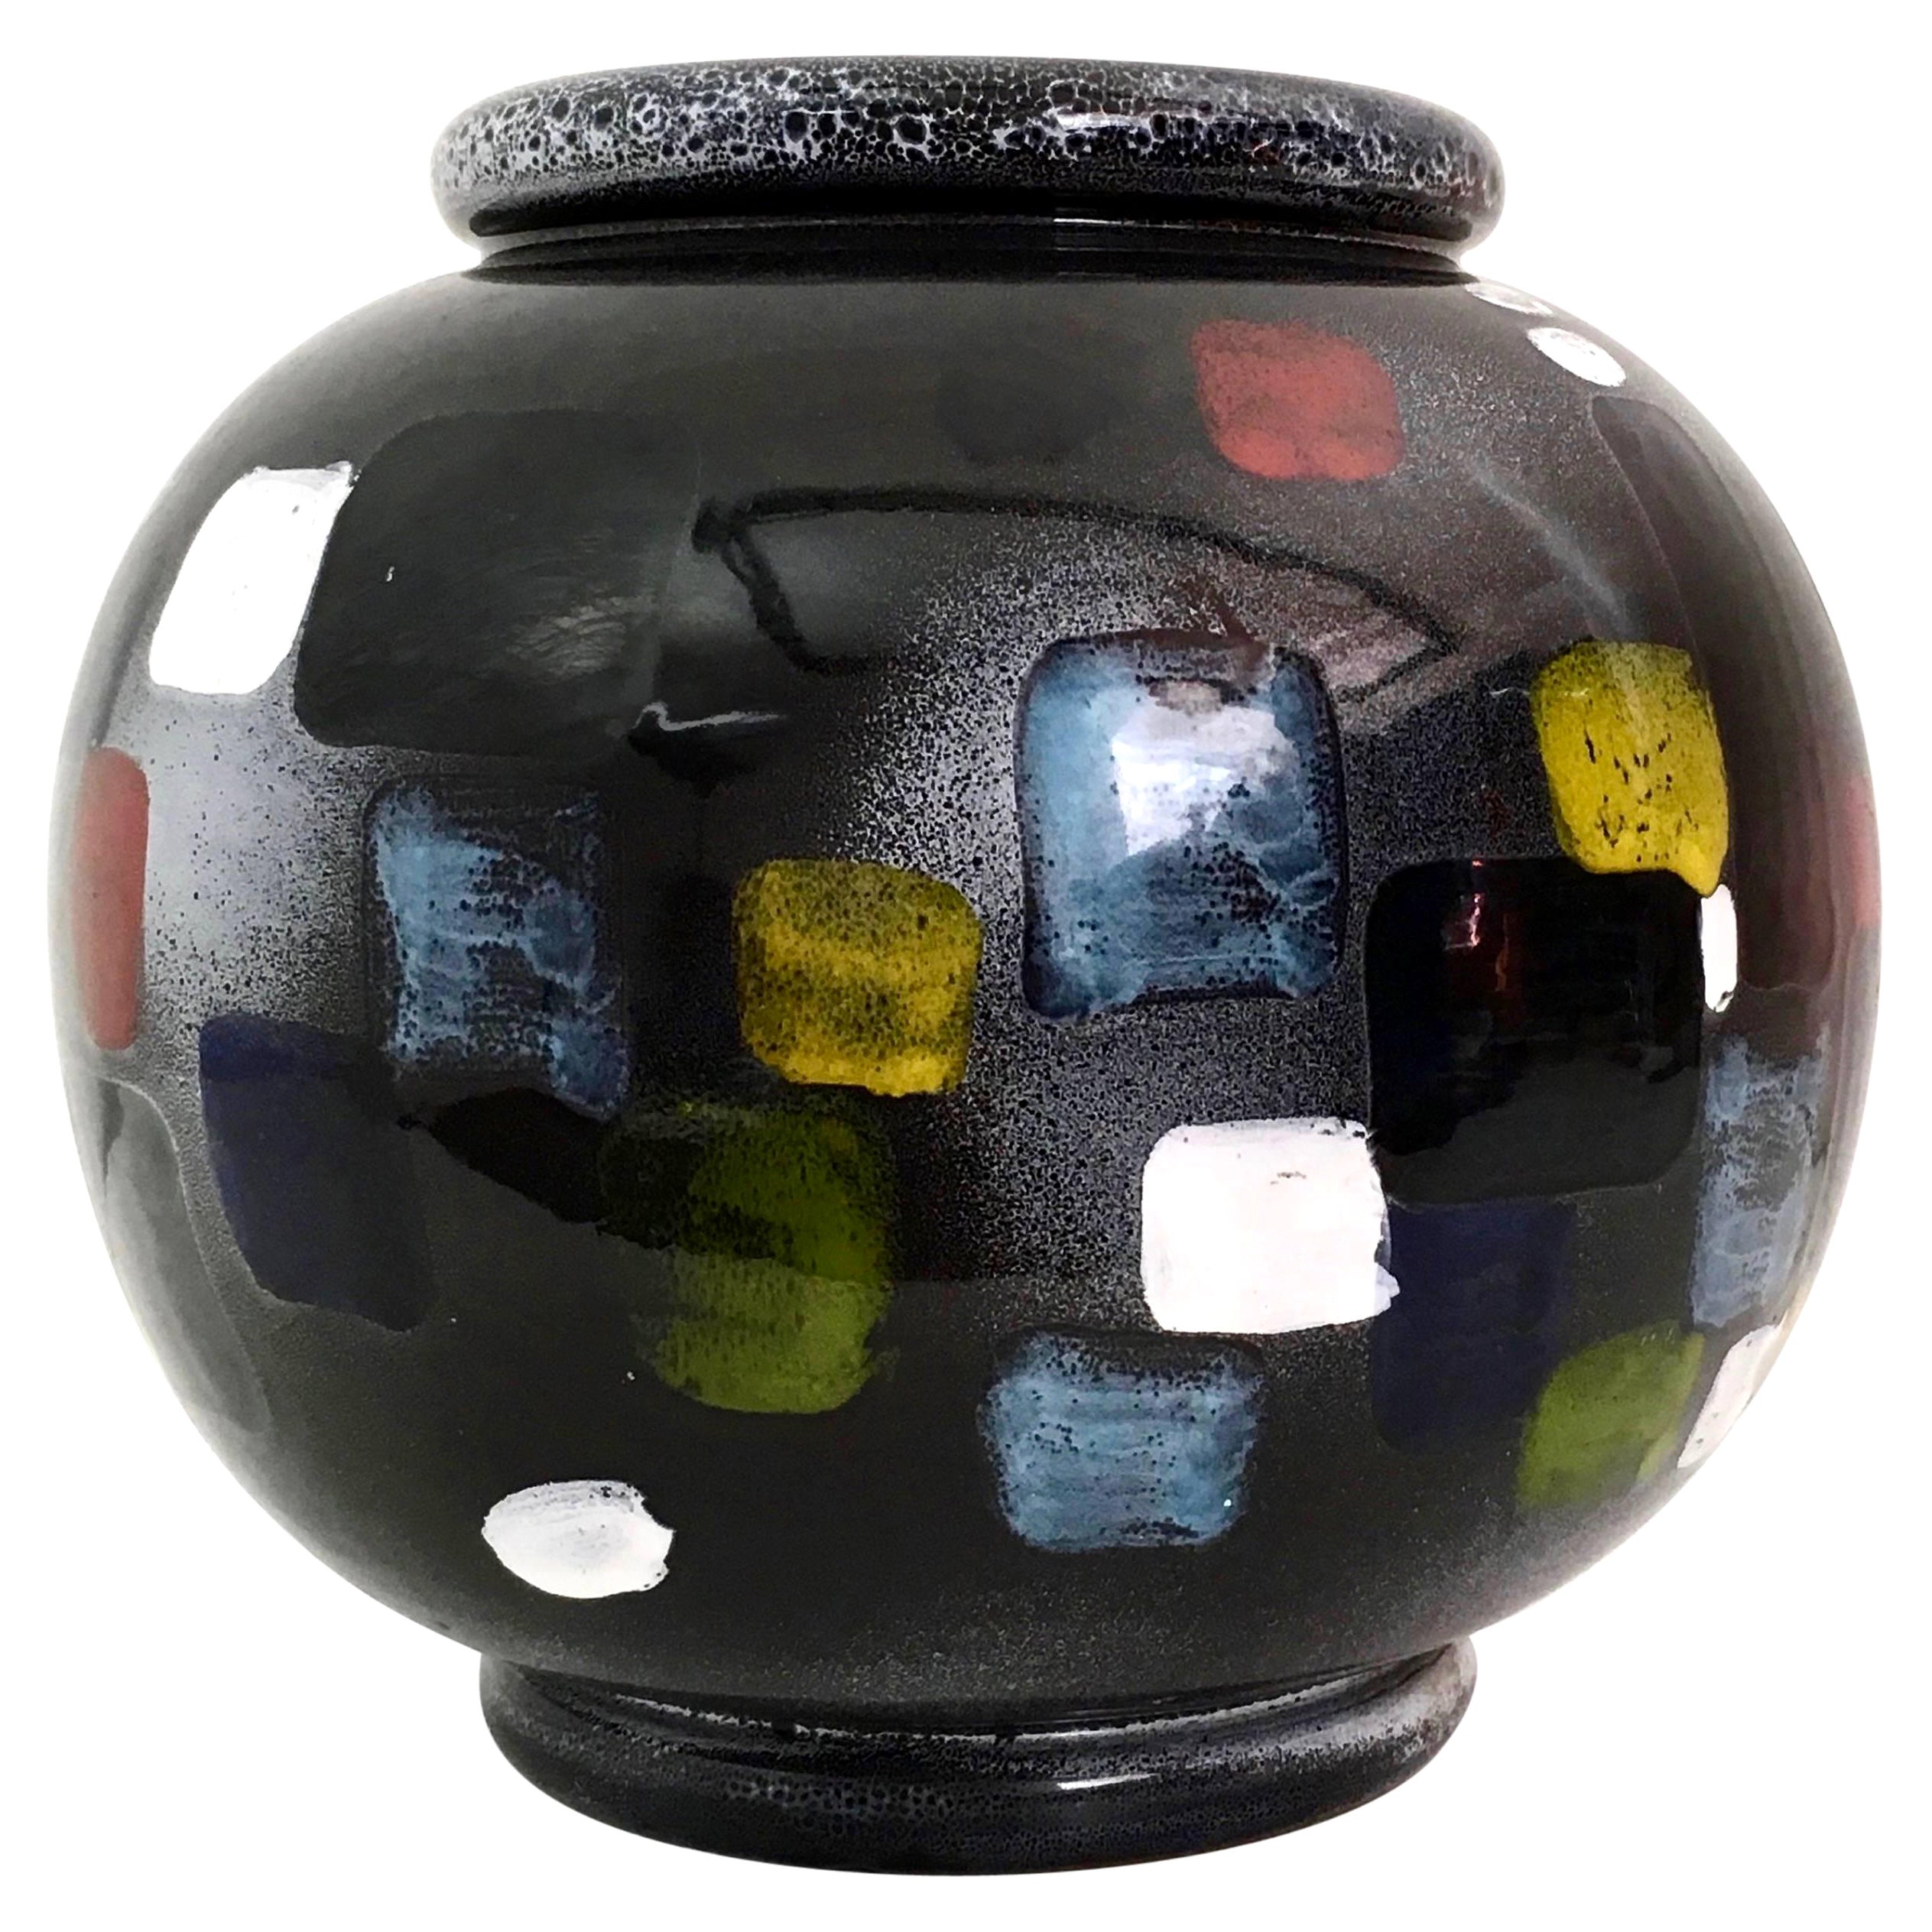 Vintage Black Deruta Ceramic Vase with Multicolored Details, Italy